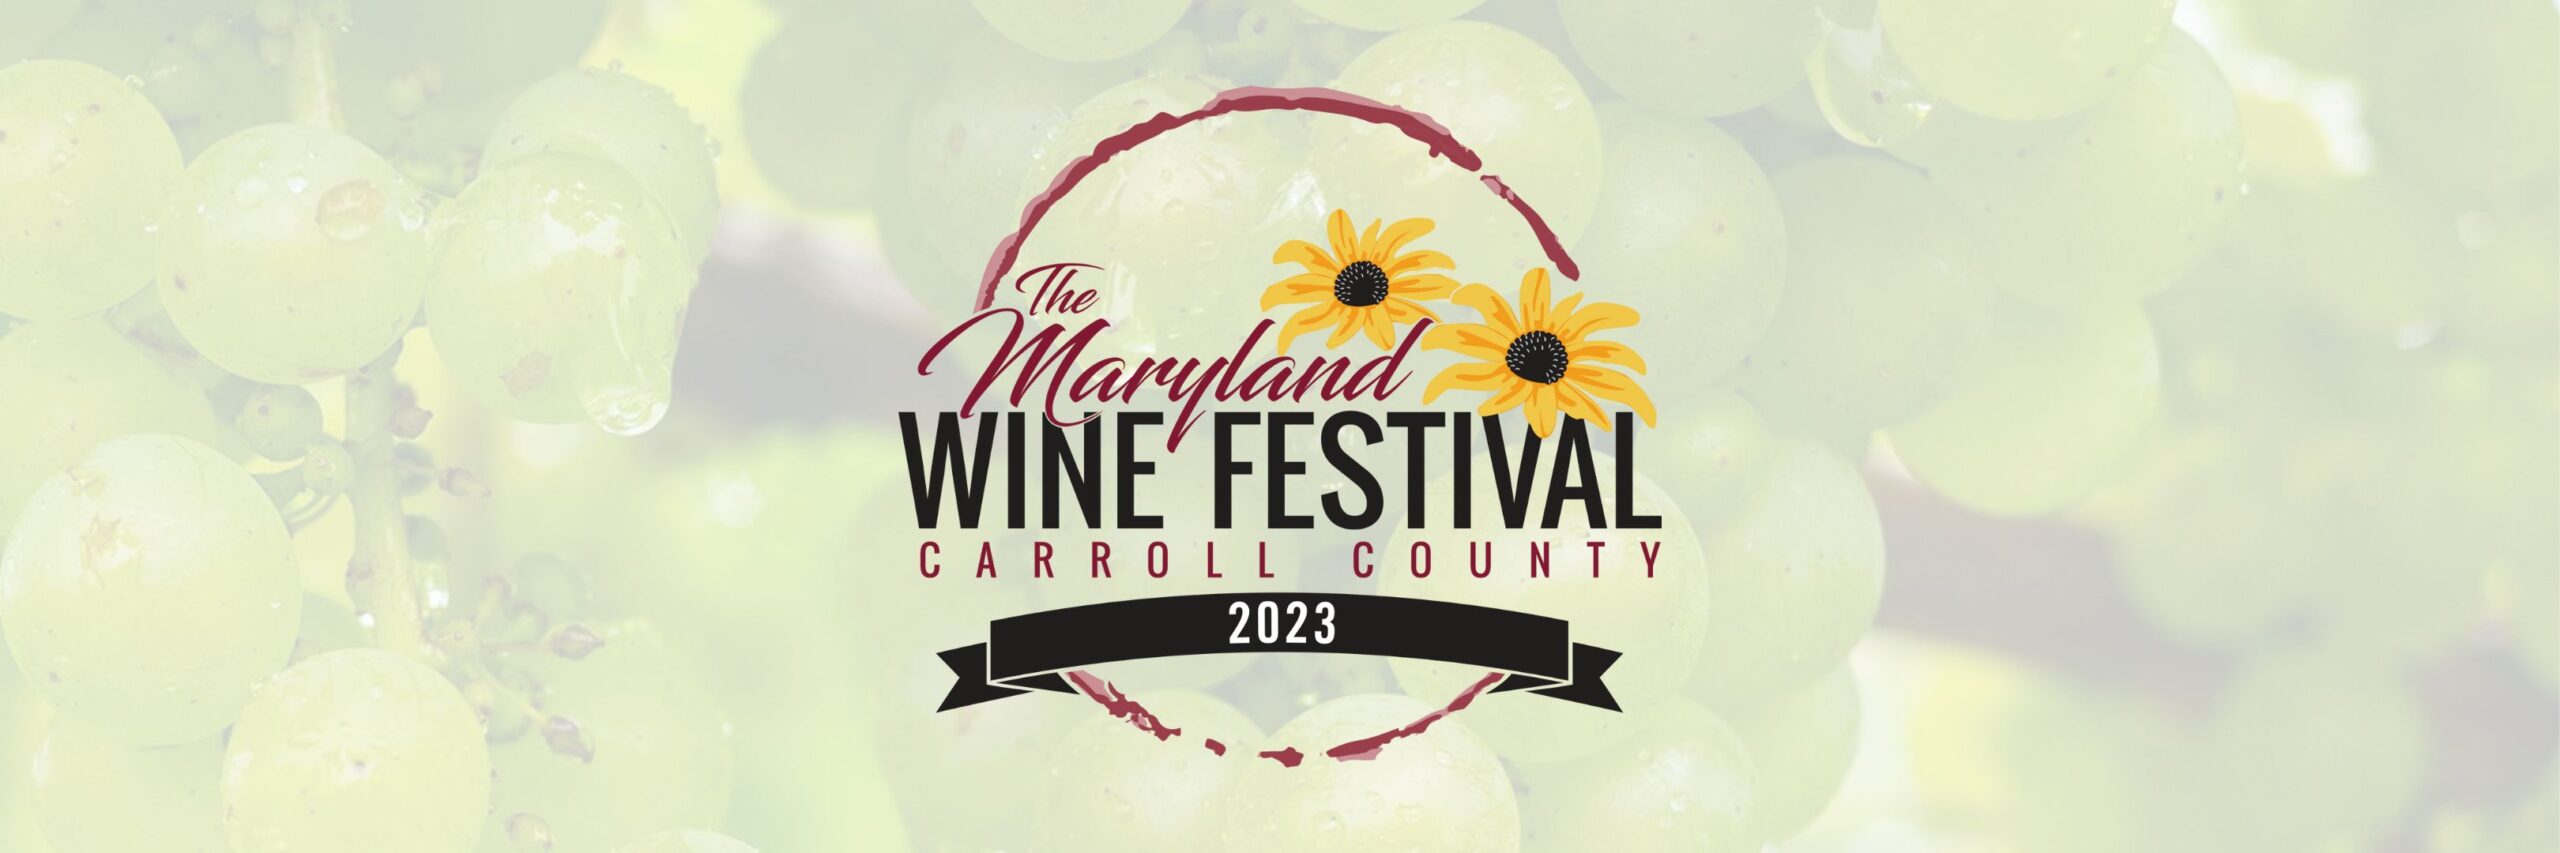 2023 Maryland Wine Festival Westminster, MD